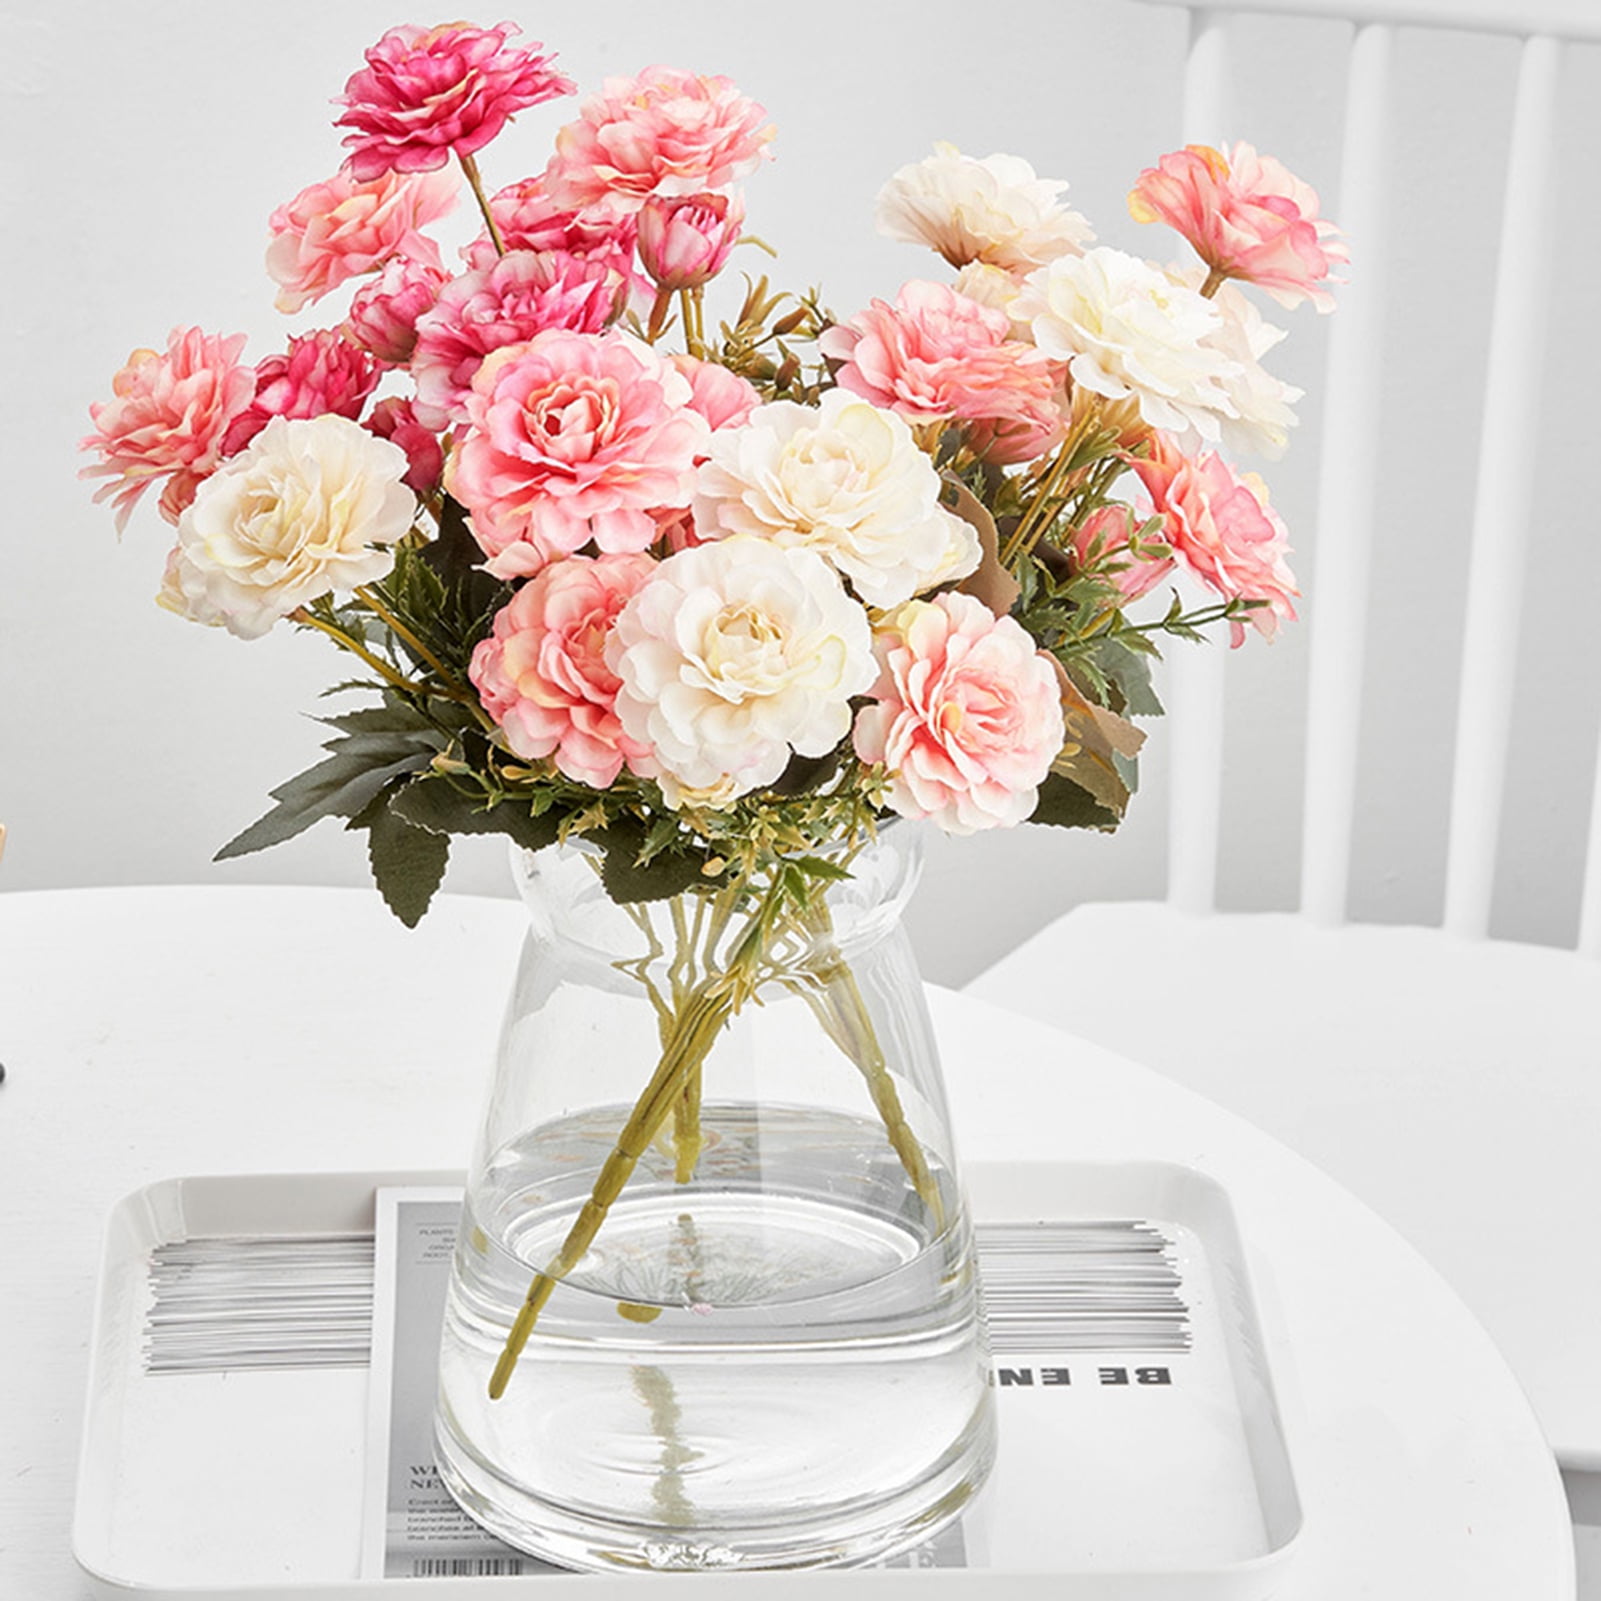 Color : Dark Vase Vintage Round Solid Wood Artificial Flower/Dried Flower Flower Arranger for Home/Hotel/Office Decoration Decoration Without Flowers 